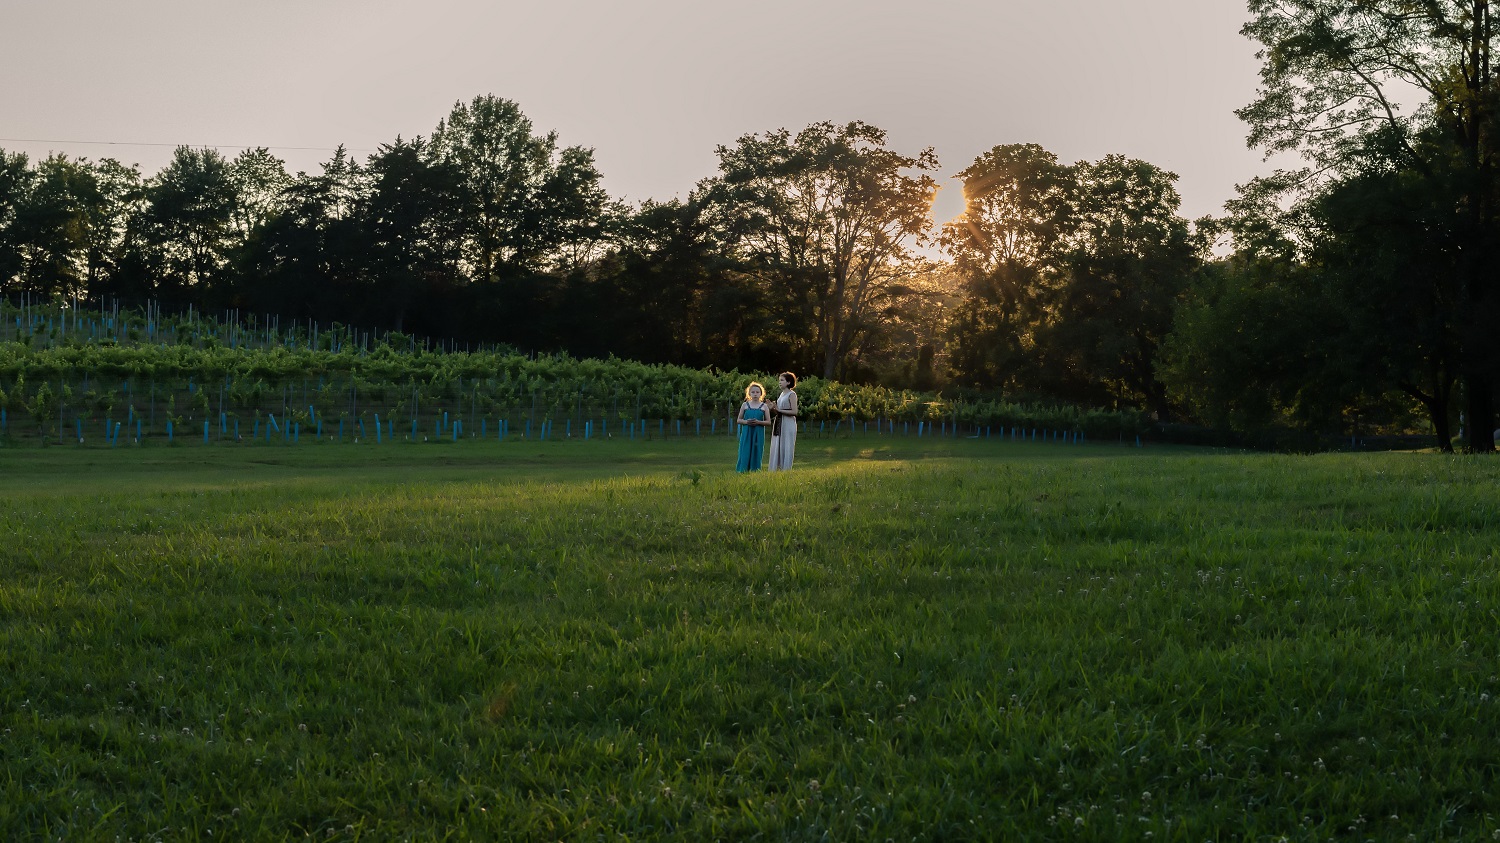 Girls in the vineyard